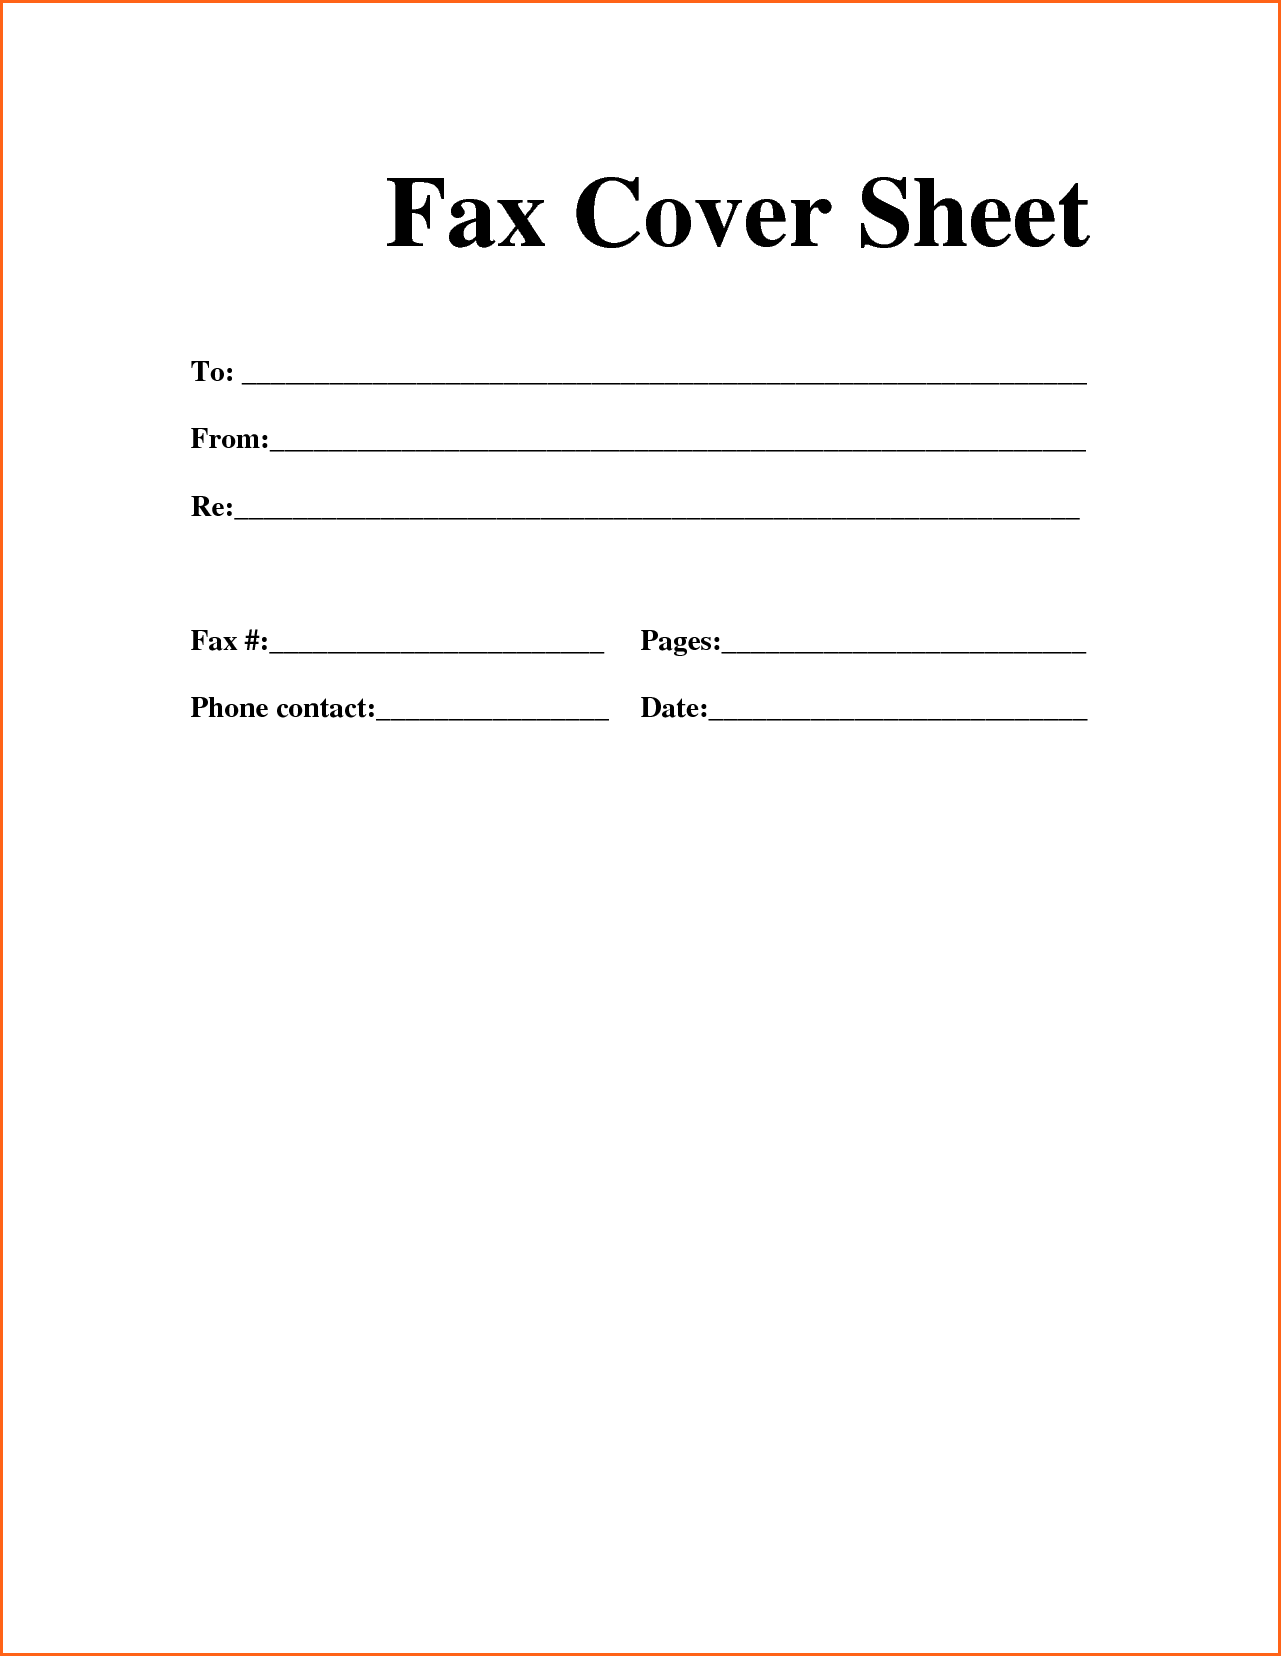 Free Printable Fax Cover Sheet Pdf | room surf.com